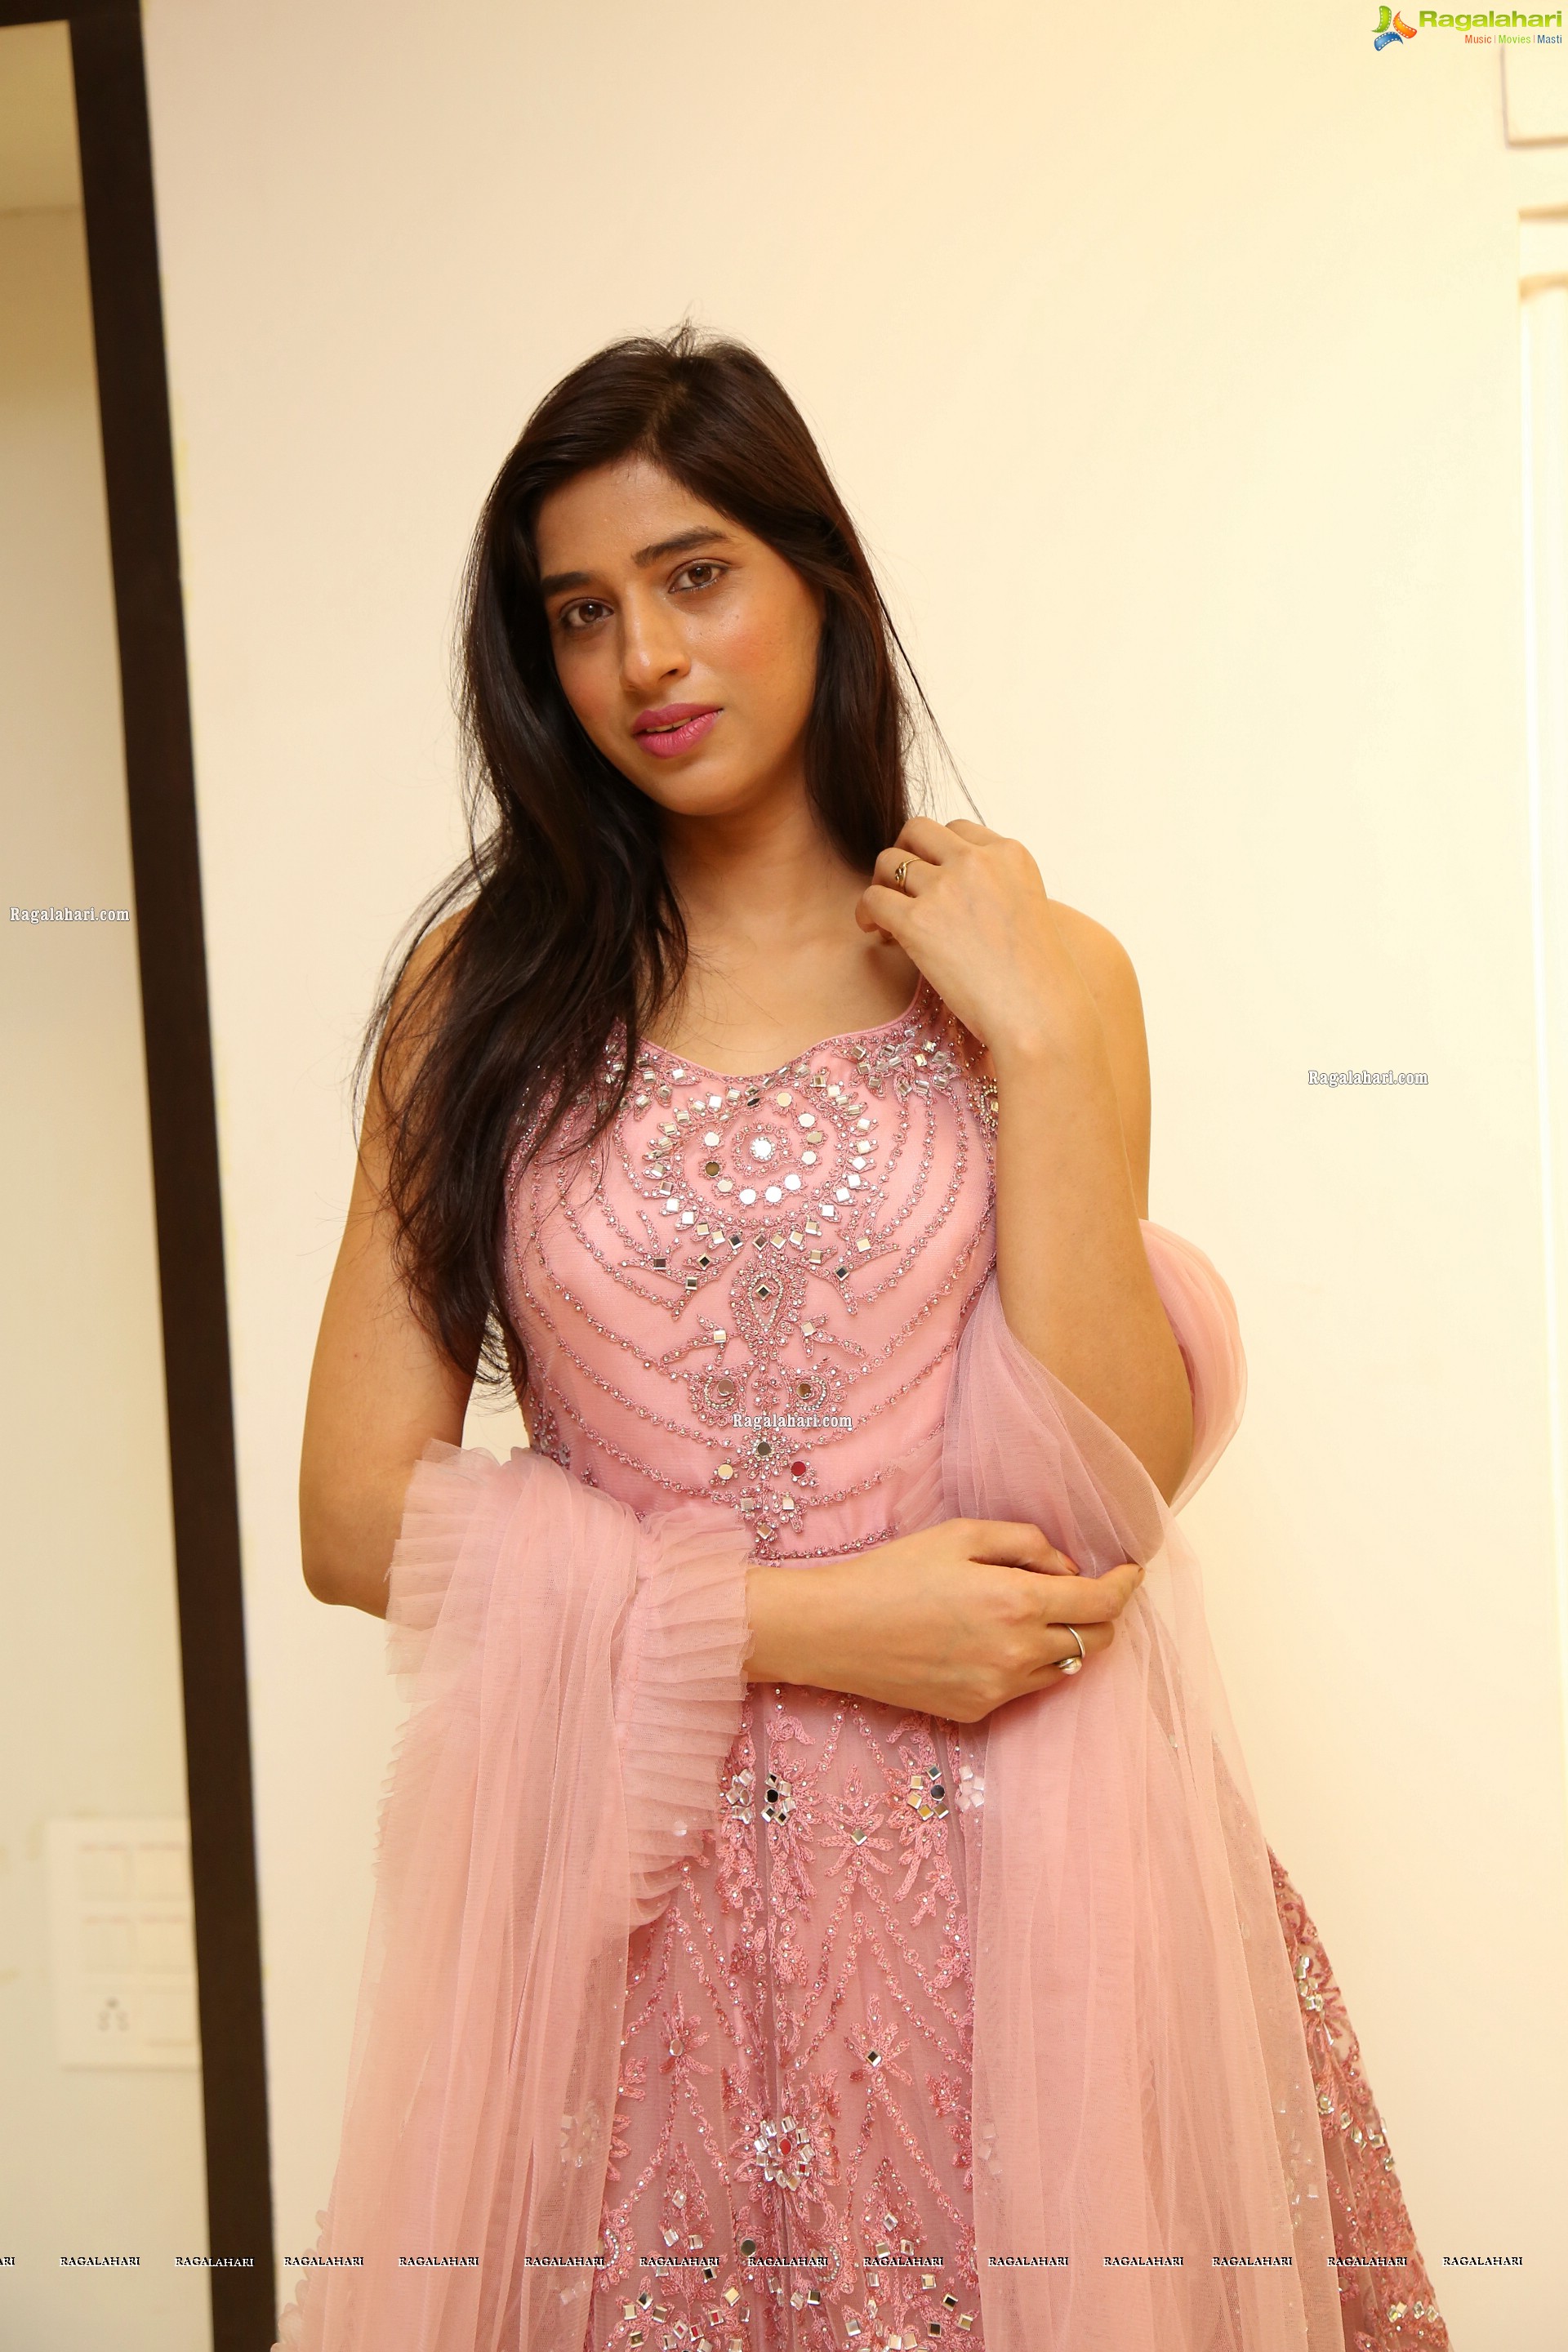 Naziya Khan in Pink Embellished Dress, HD Photo Gallery